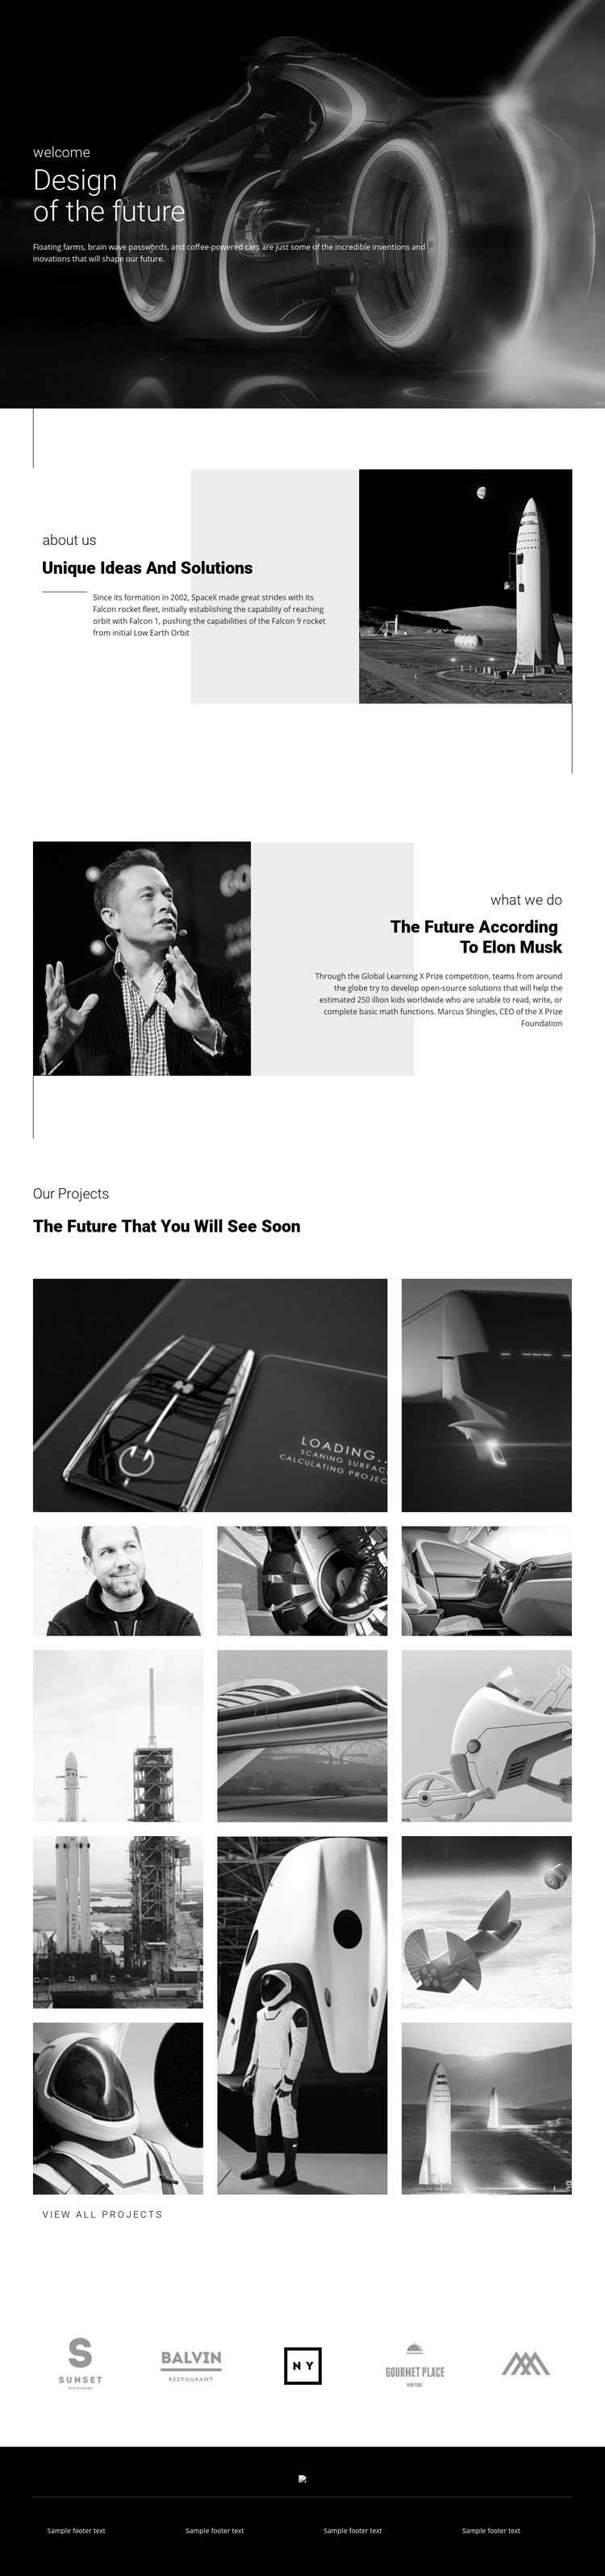 Design of future technology Homepage Design